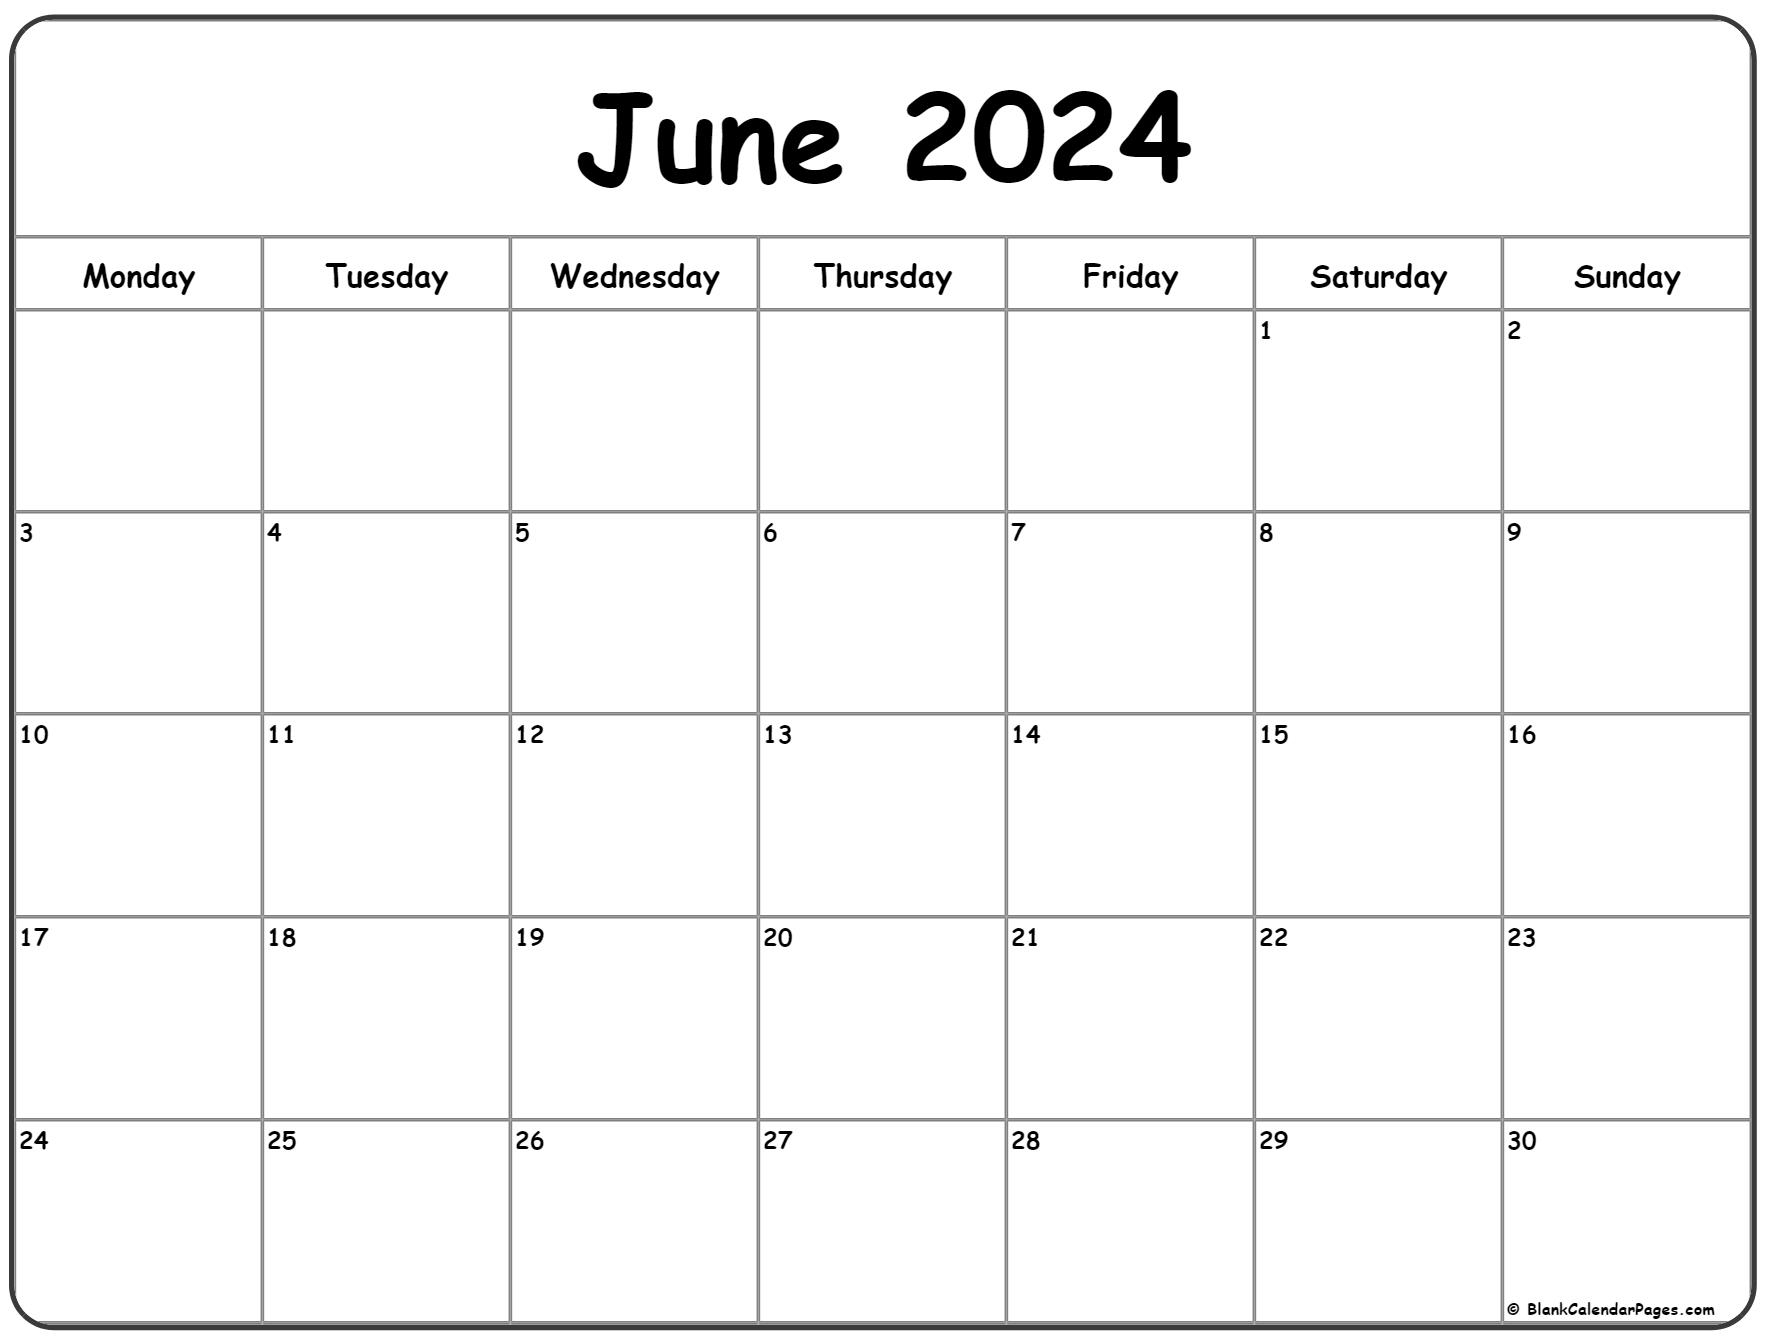 June Schedule 2022 June 2022 Monday Calendar | Monday To Sunday